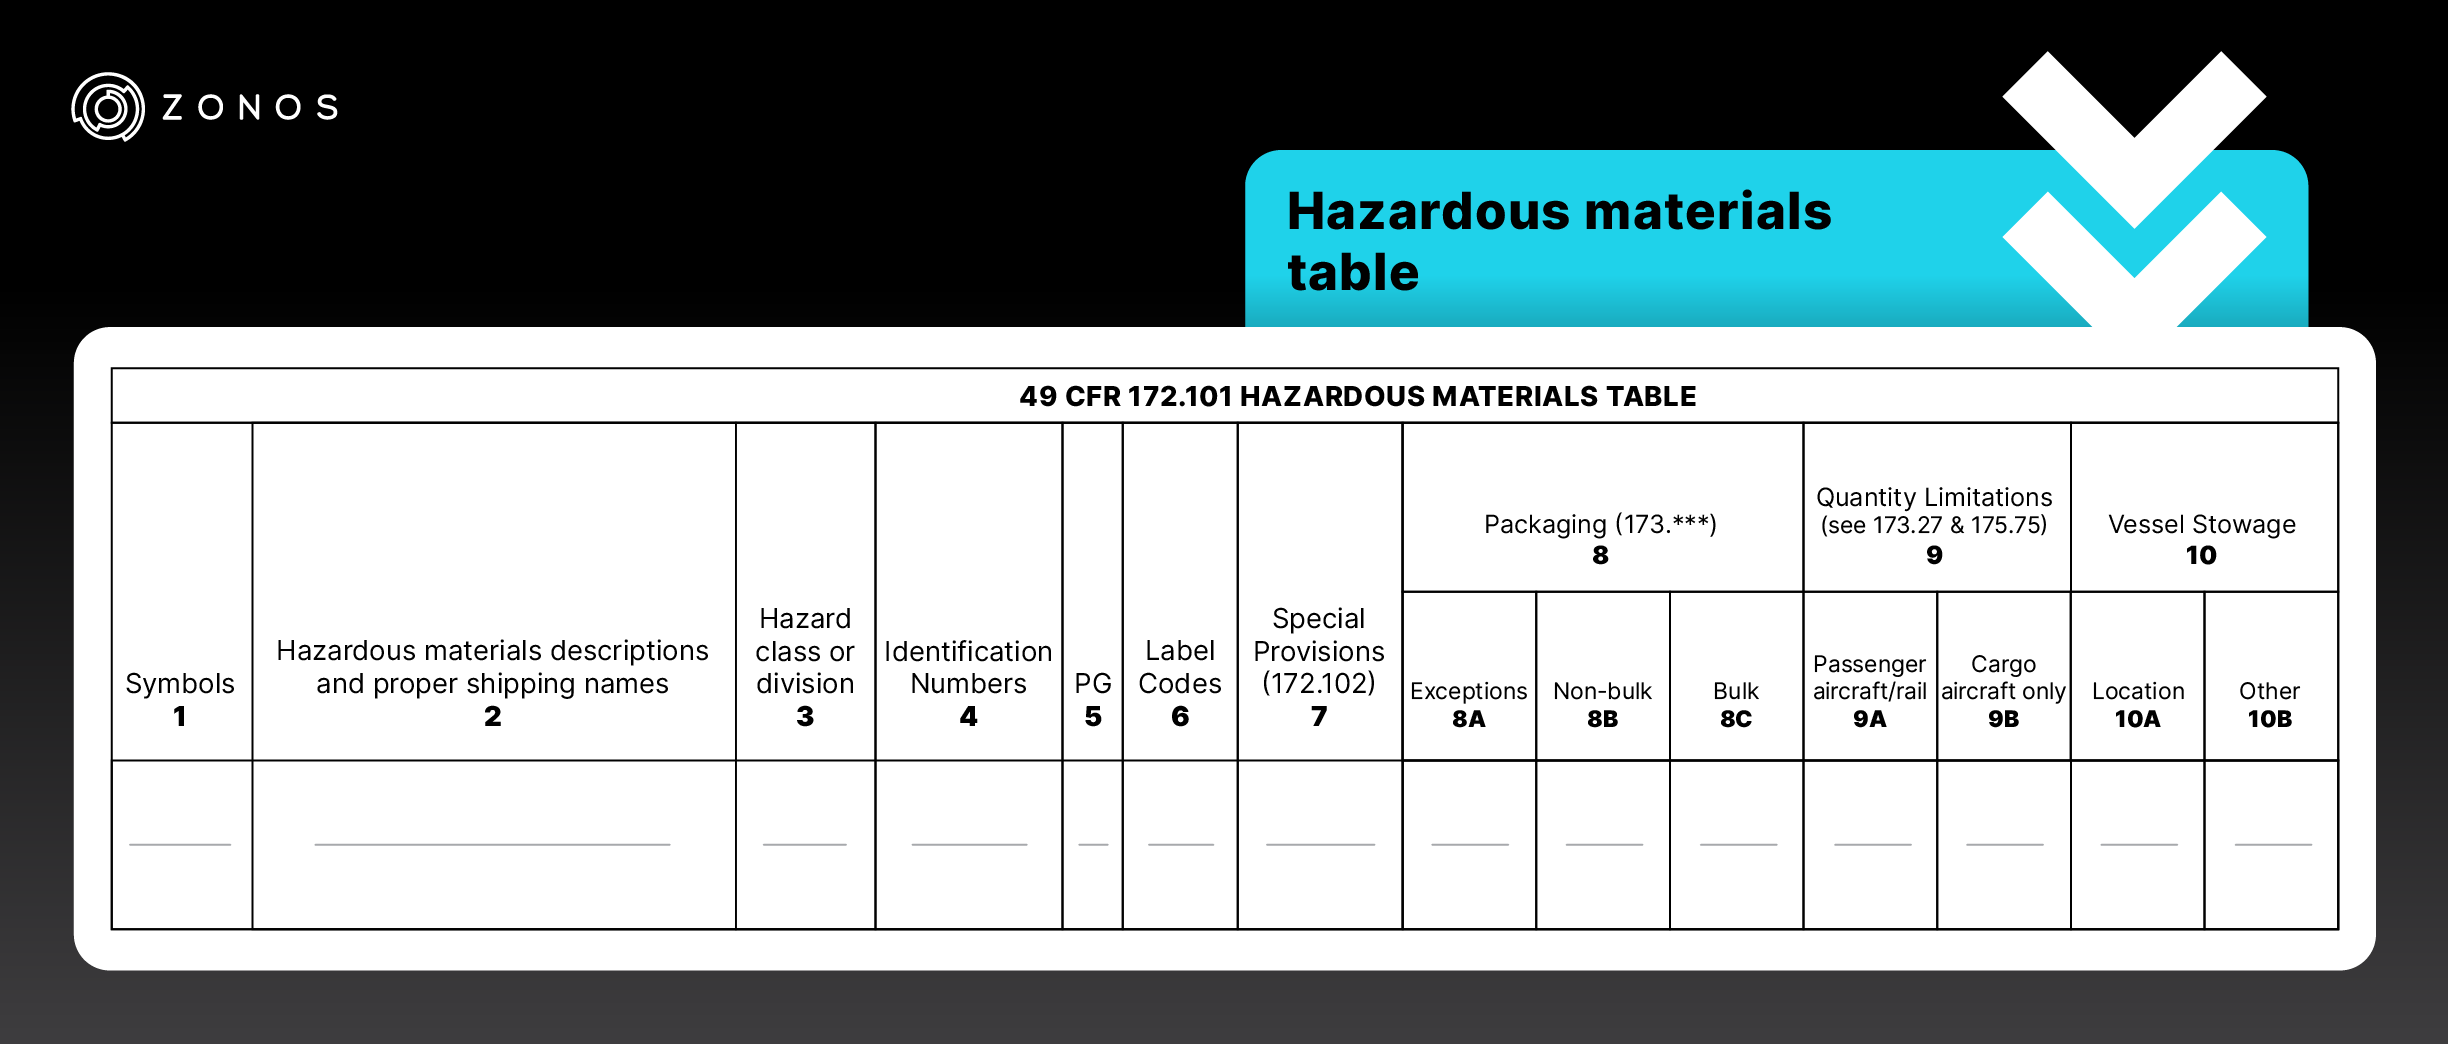 Zonos' custom graphic showing the hazardous materials
table